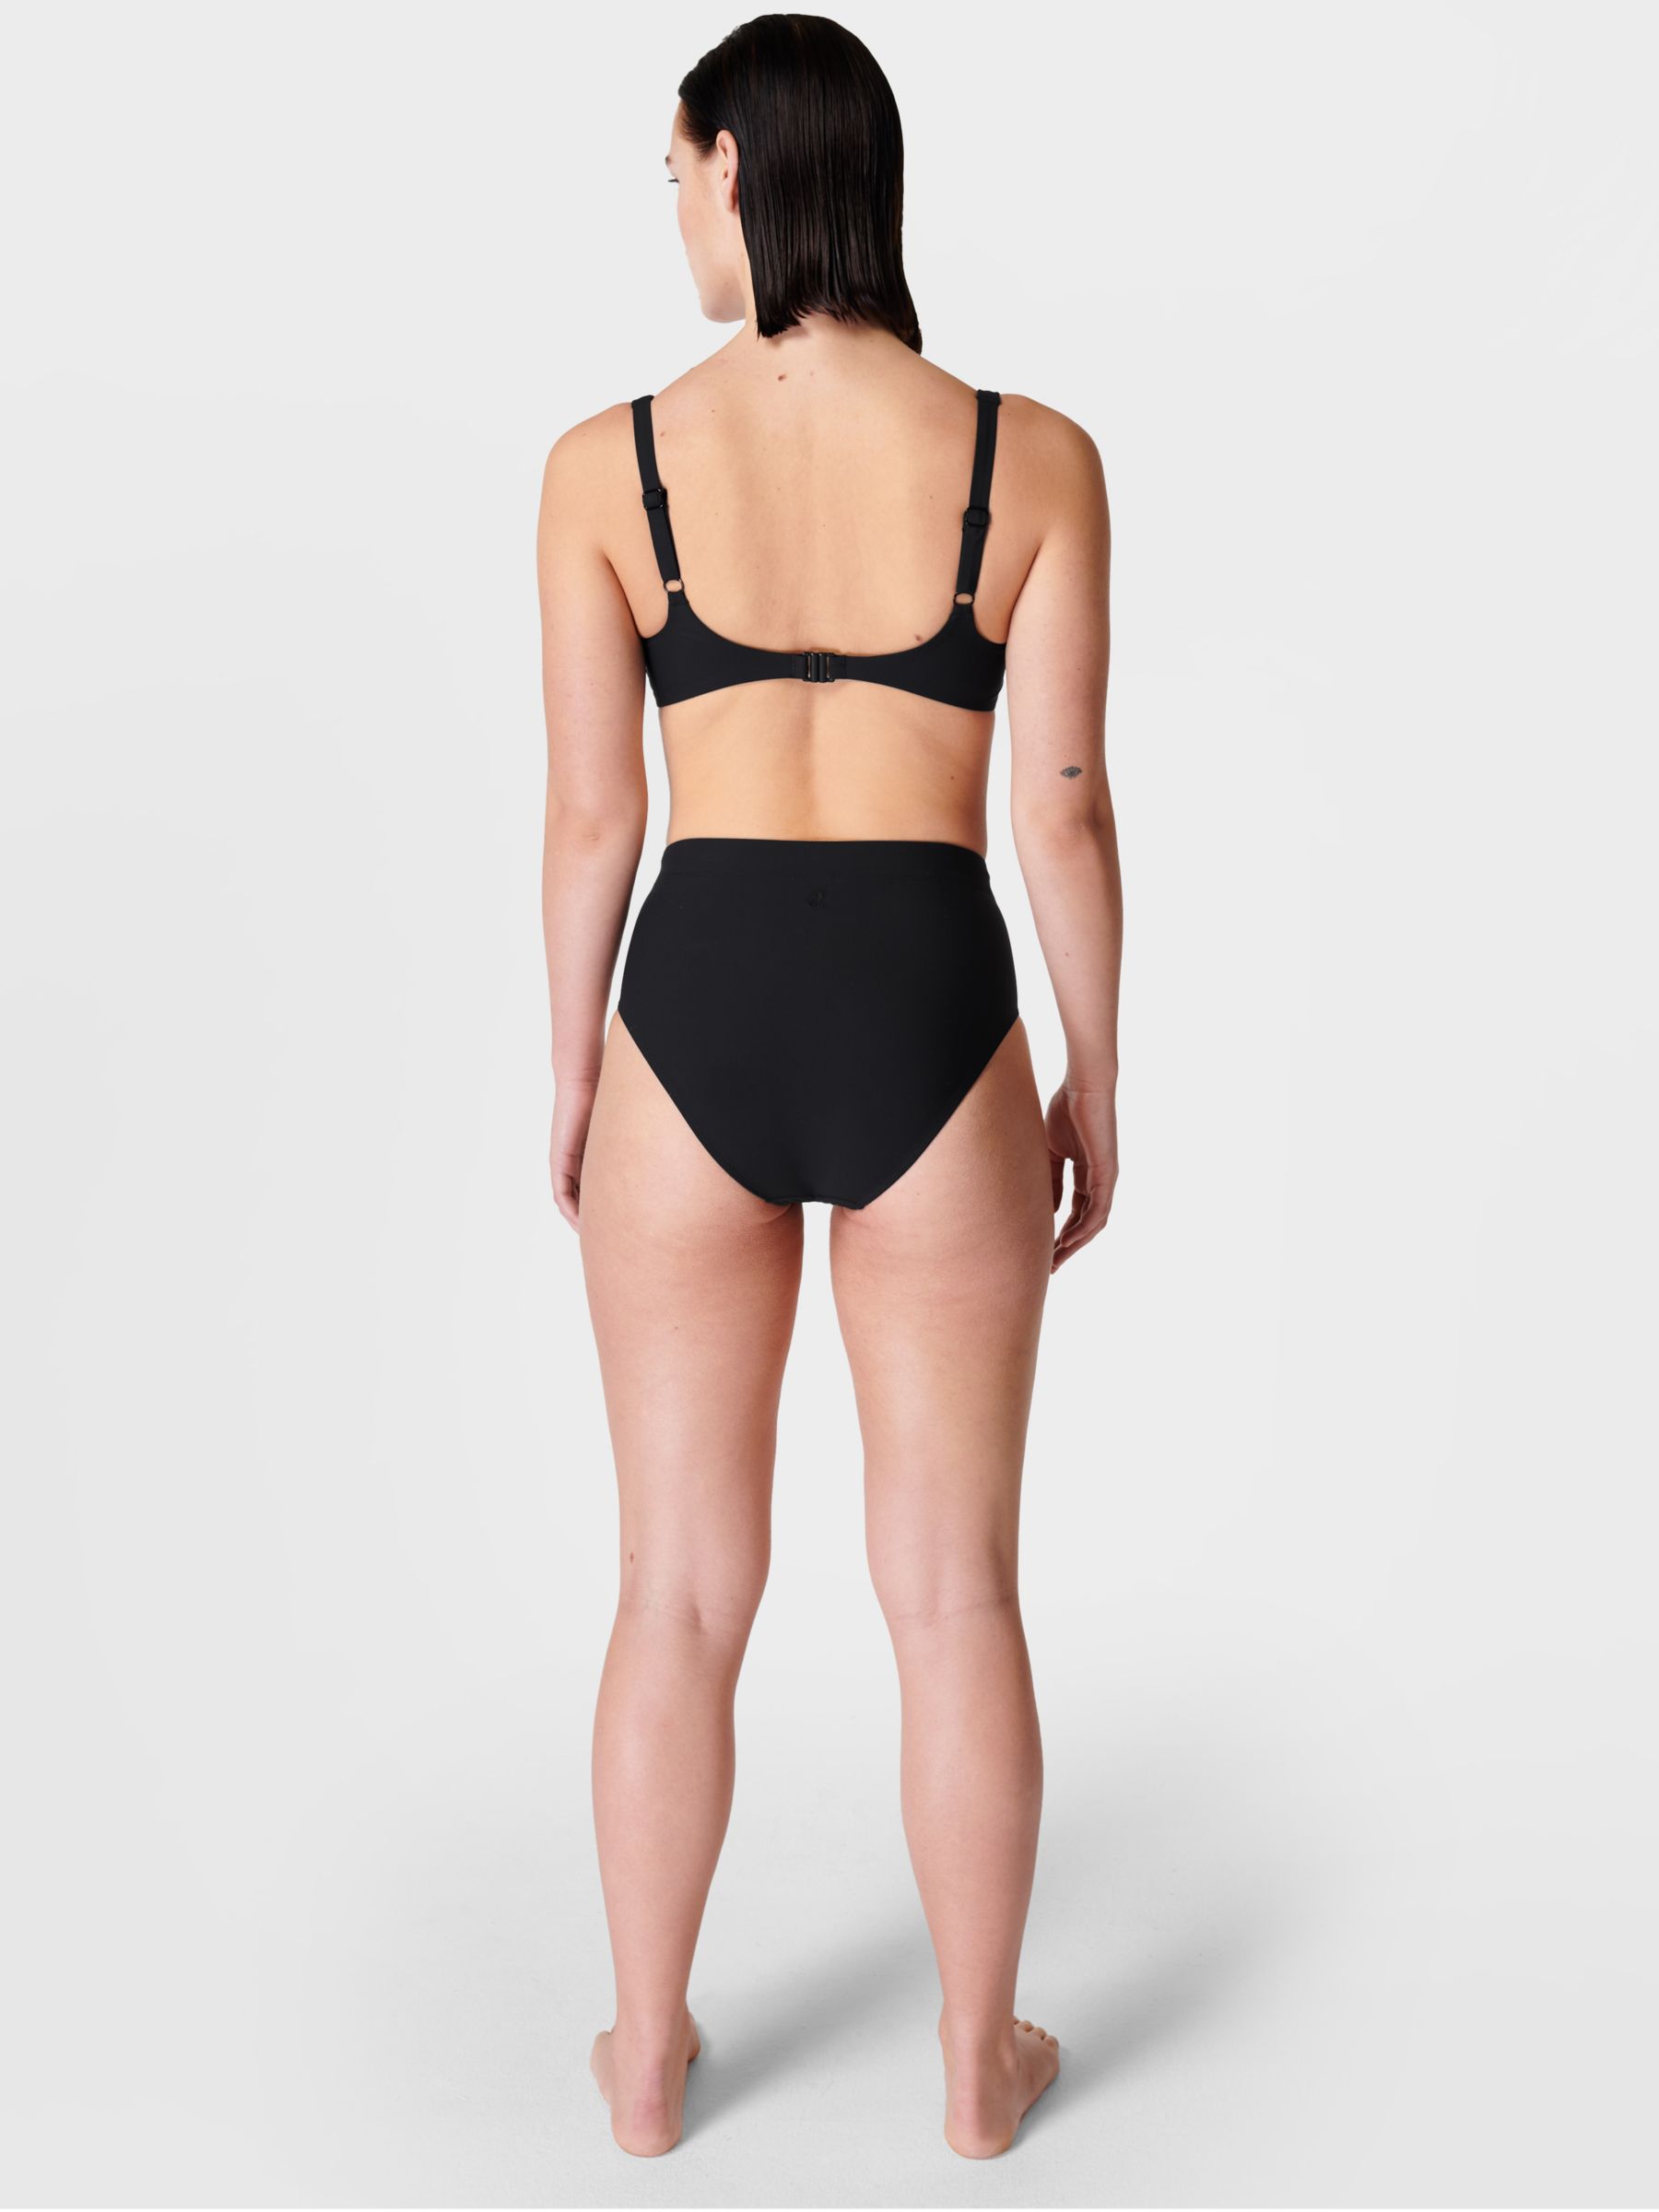 Sweaty Betty Laguna Underwired Bikini Top, Black, M(B-C)